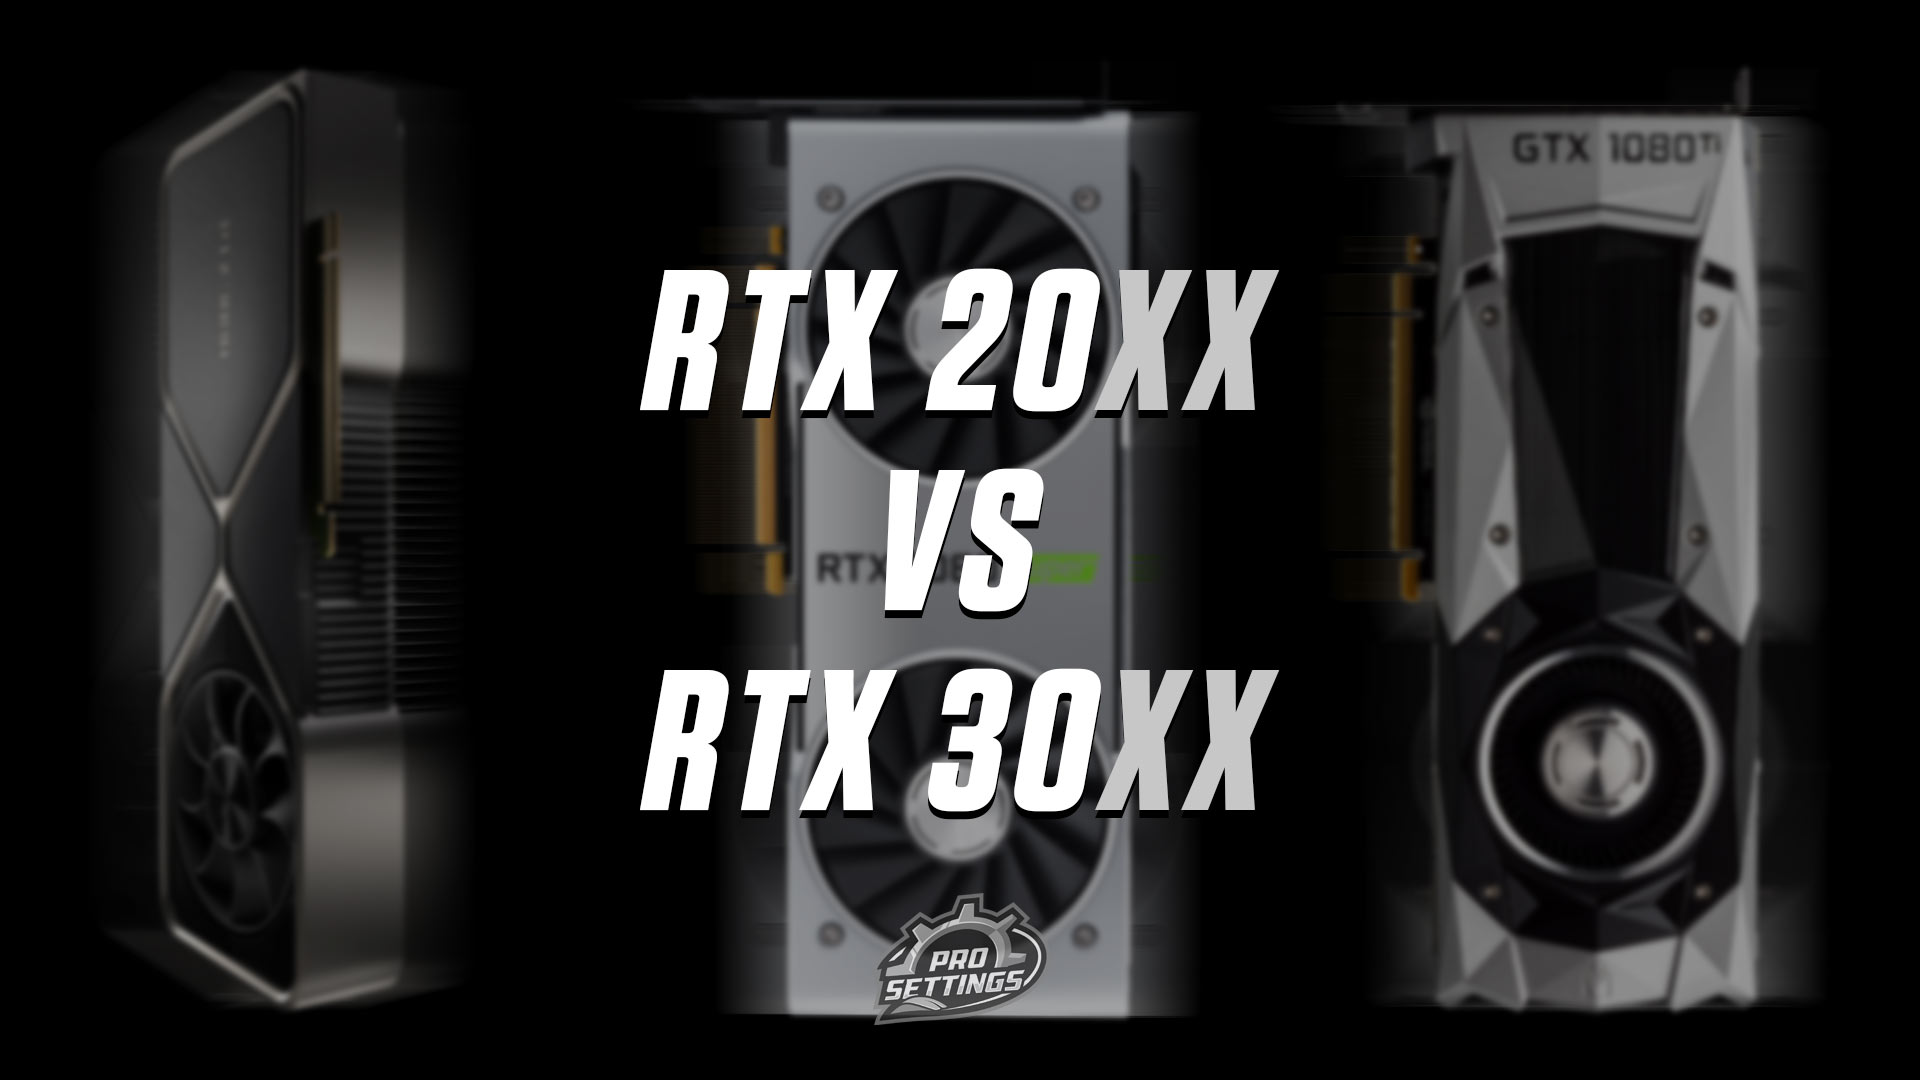 Nvidia GeForce RTX 30 series vs RTX 20 series